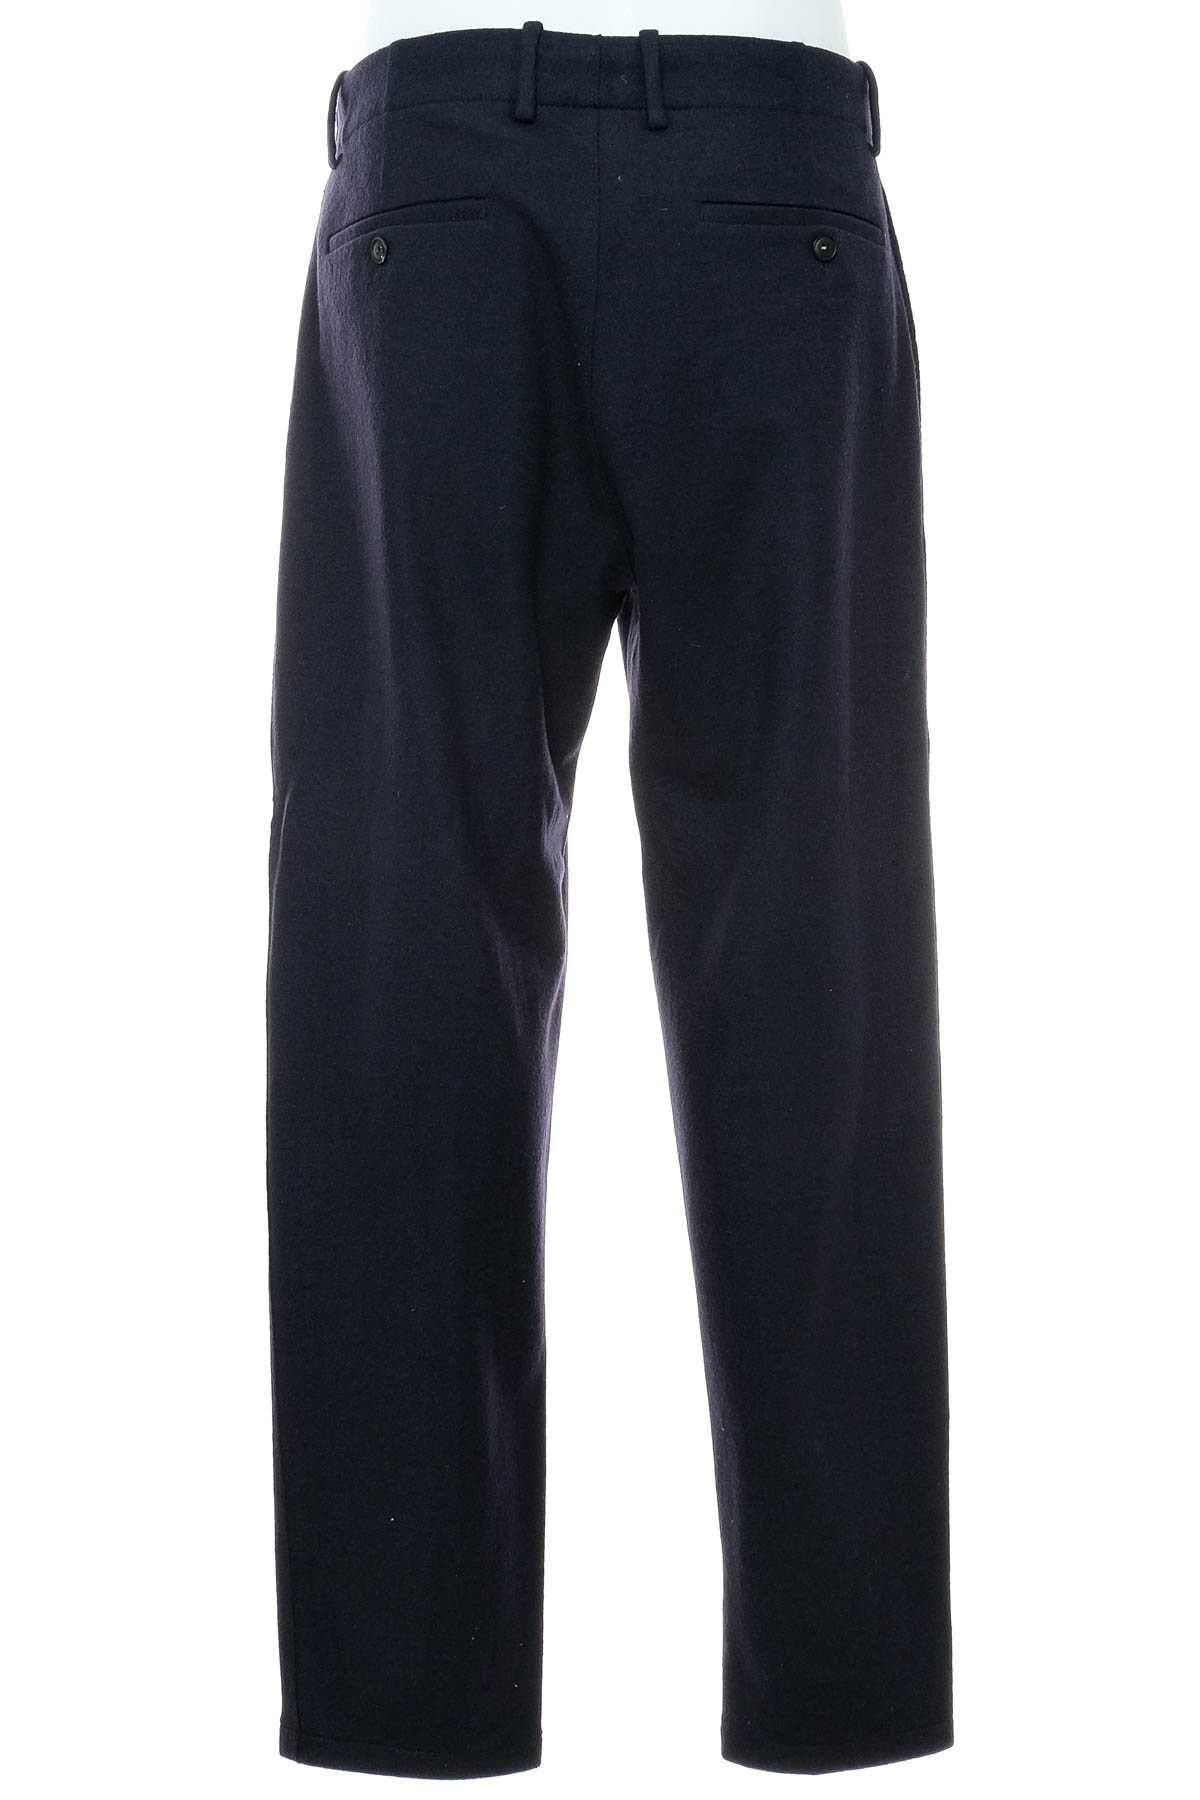 Pantalon pentru bărbați - EMPORIO ARMANI - 1